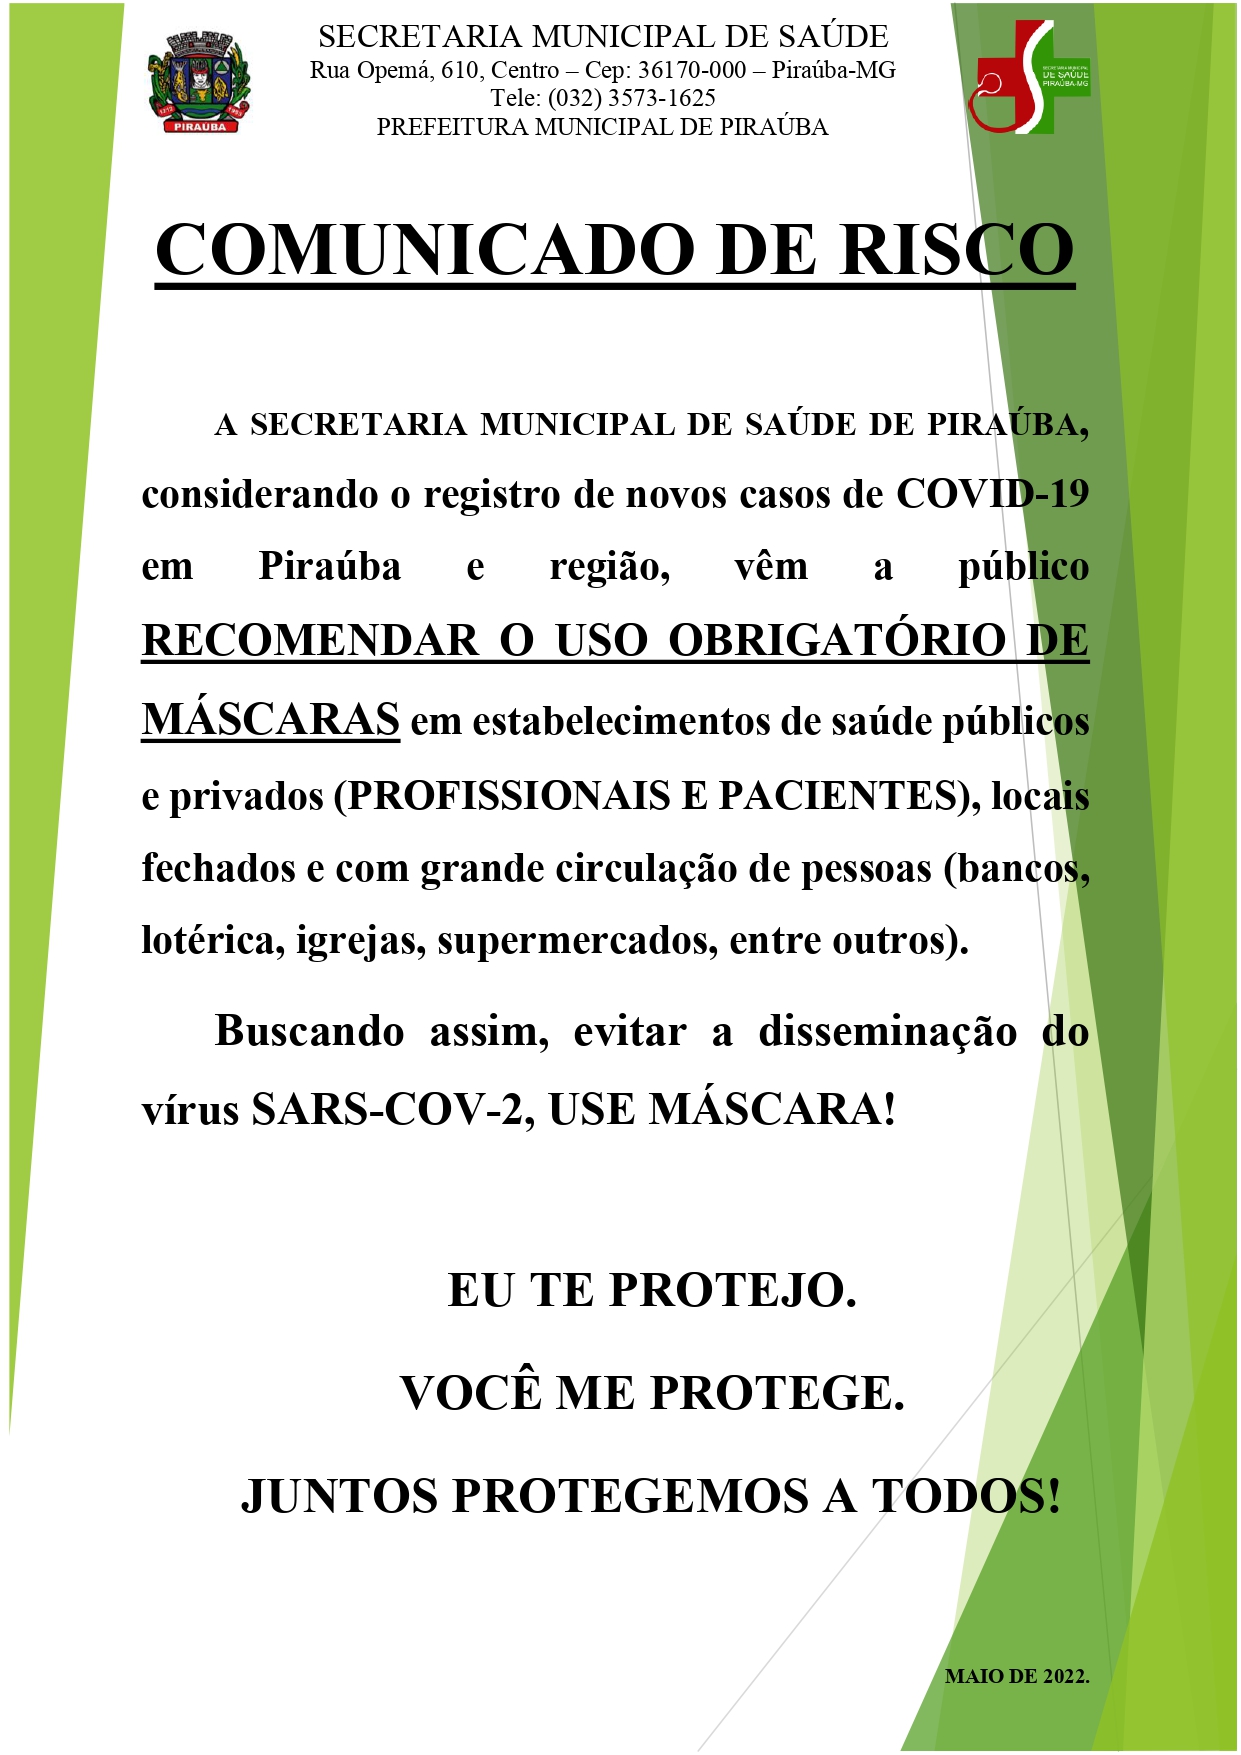 COMUNICADO DE RISCO | COVID-19 | SECRETARIA MUNICIPAL DE SAÚDE DE PIRAÚBA